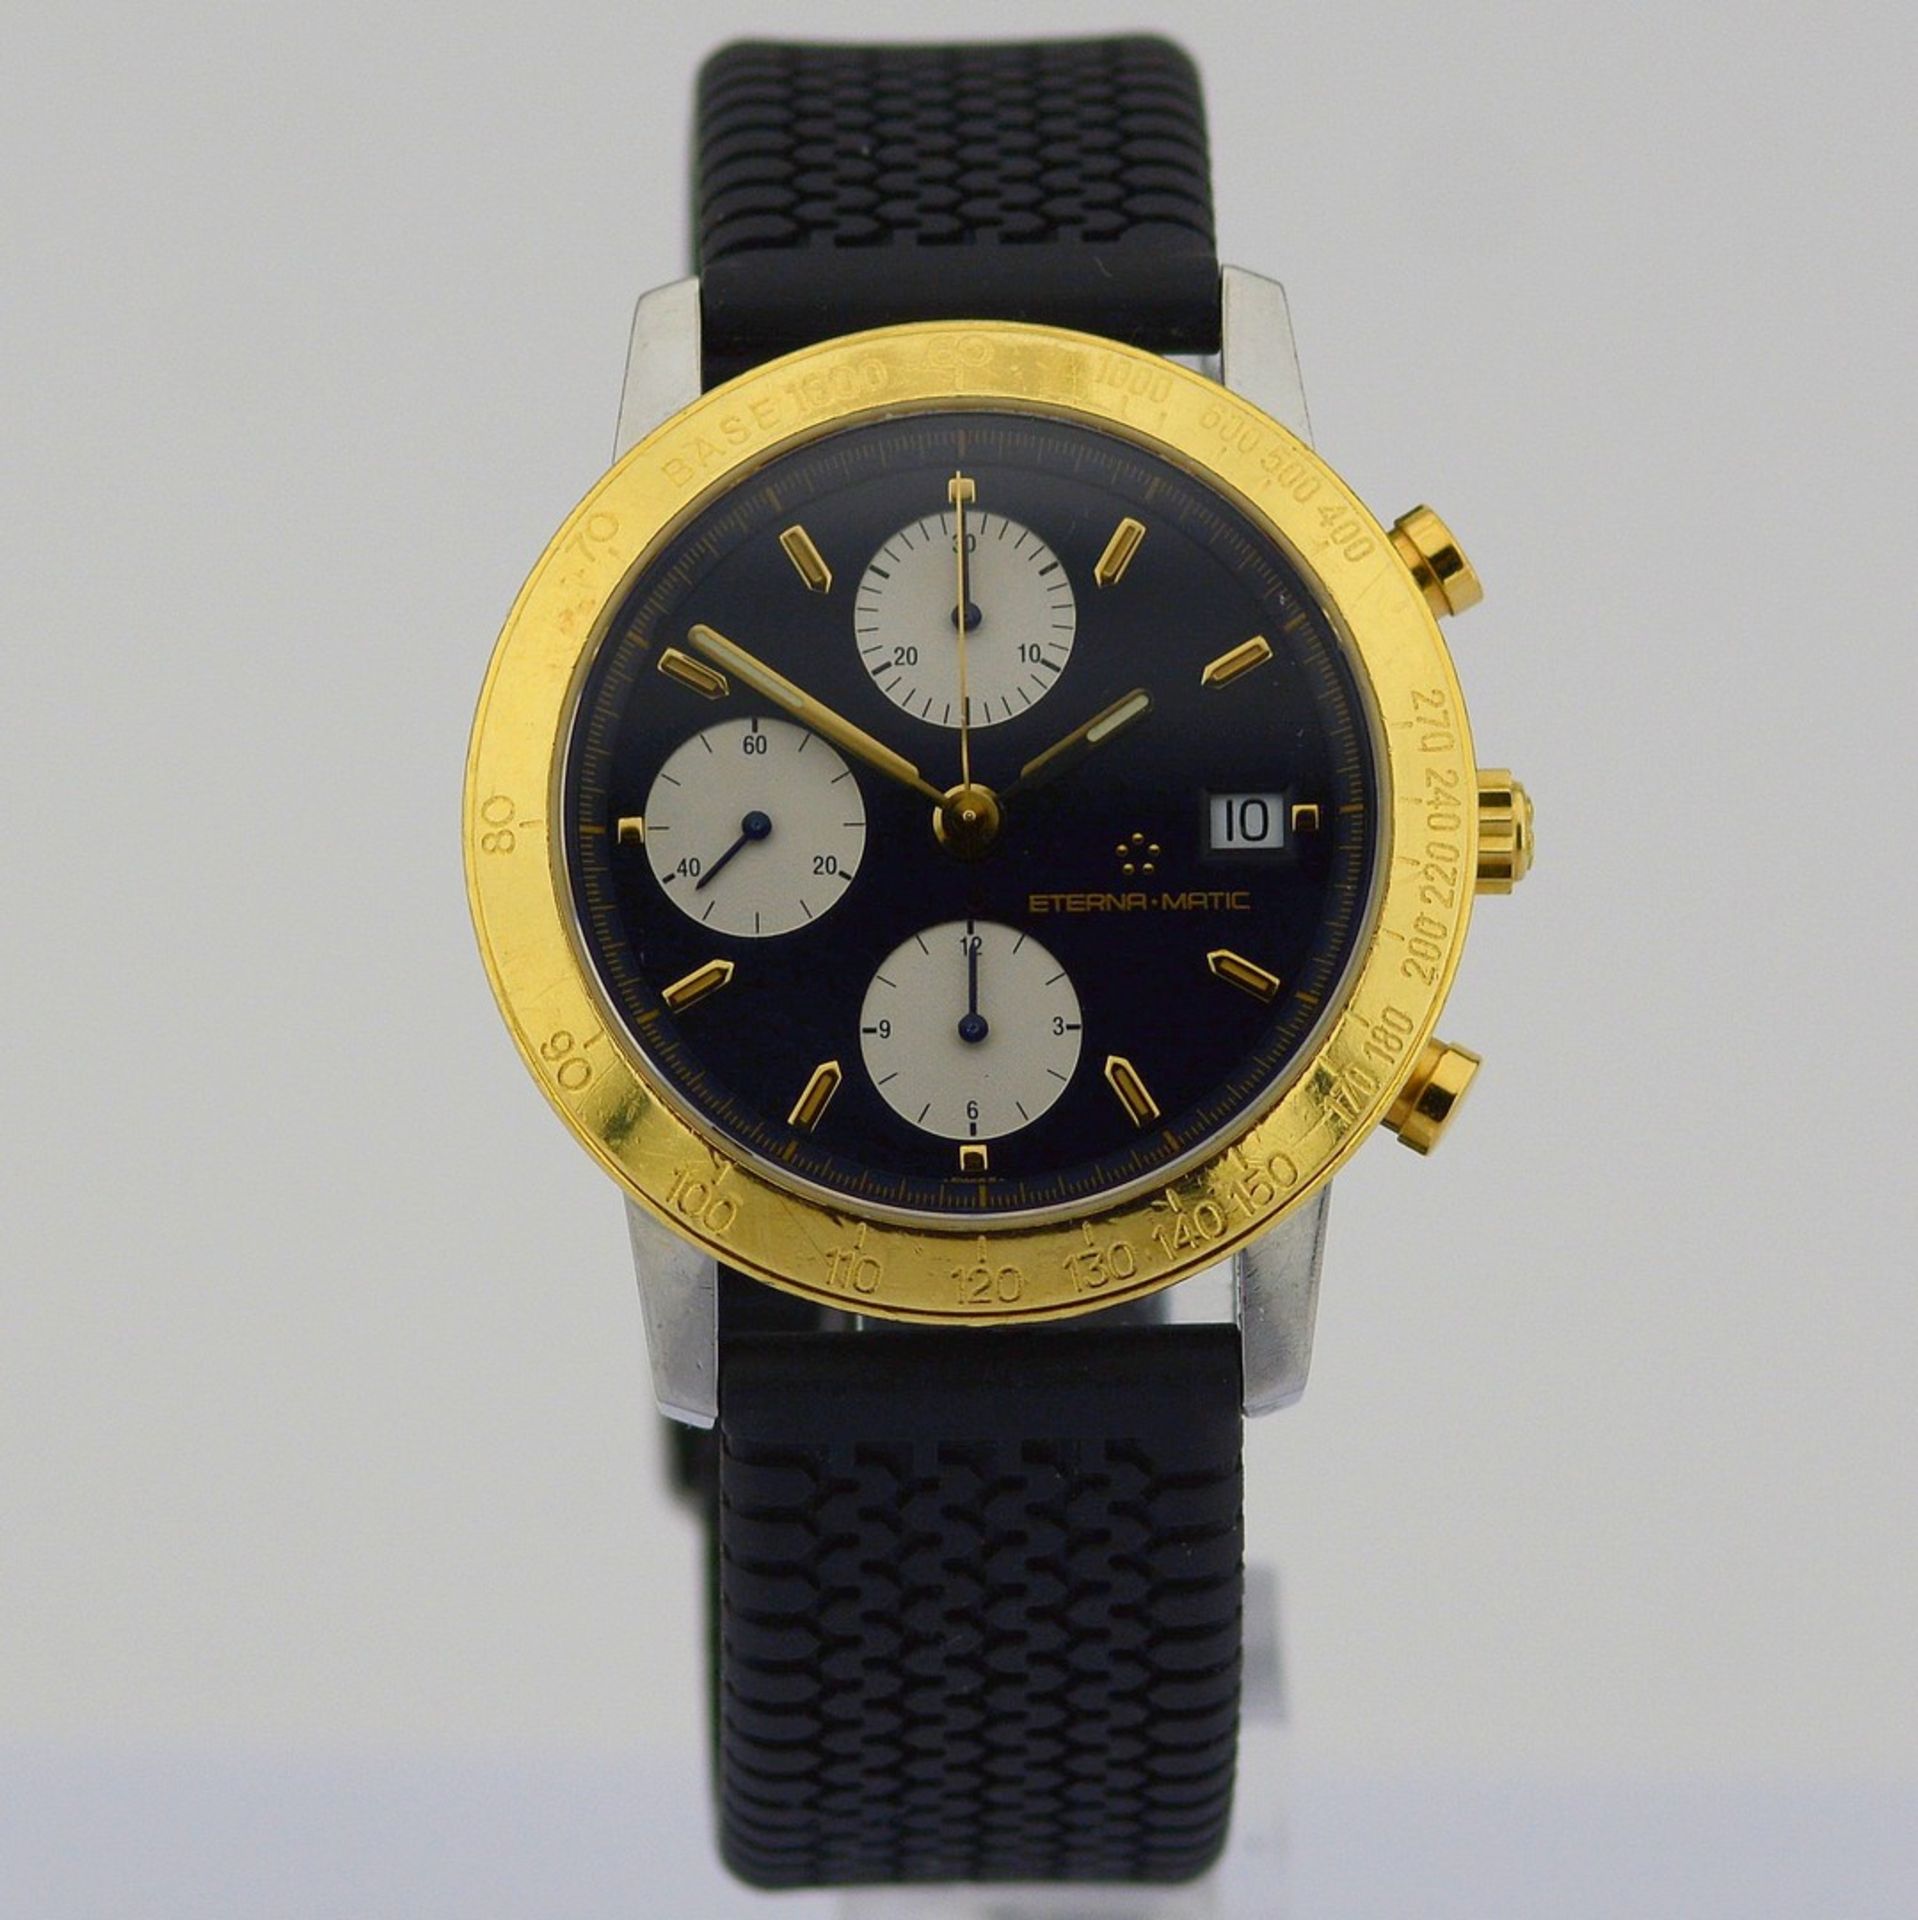 Eterna-Matic / Kontiki Chronograph - Gentlmen's Gold/Steel Wrist Watch - Image 2 of 10